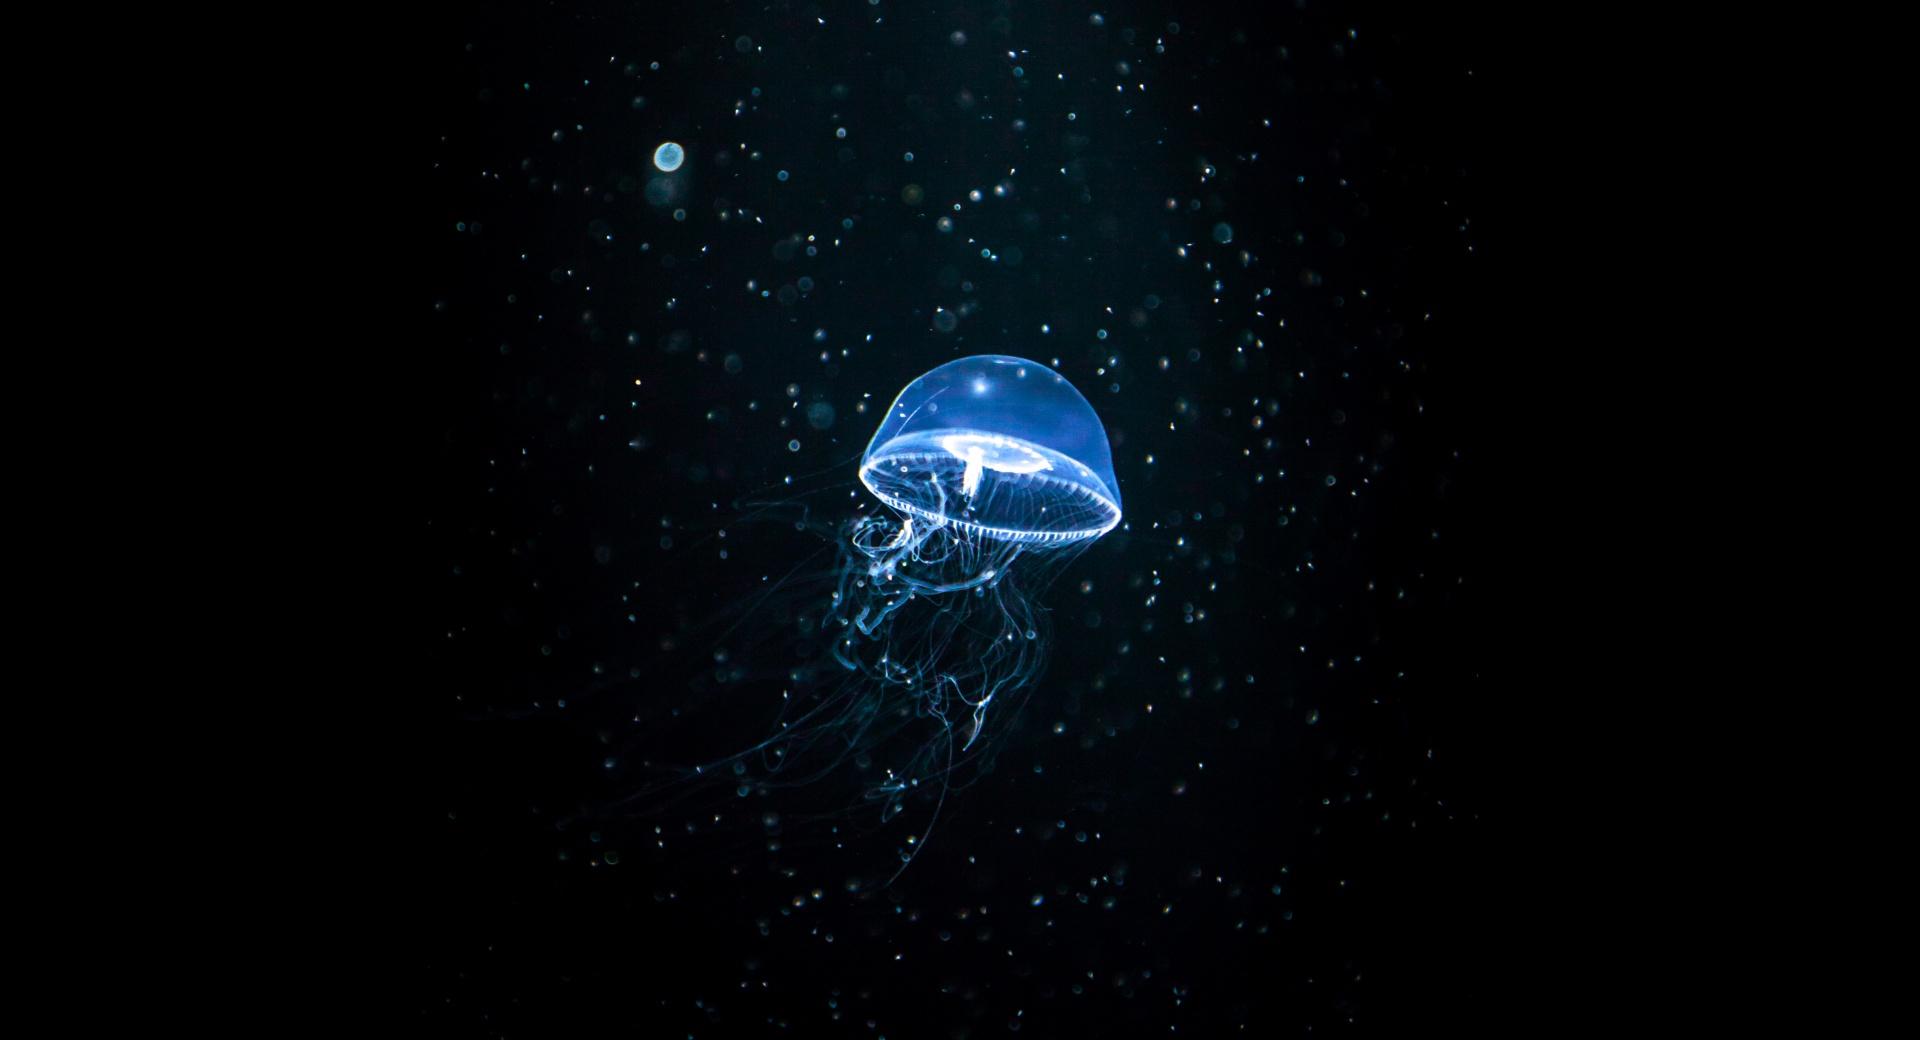 Jellyfish Dark at 1024 x 1024 iPad size wallpapers HD quality